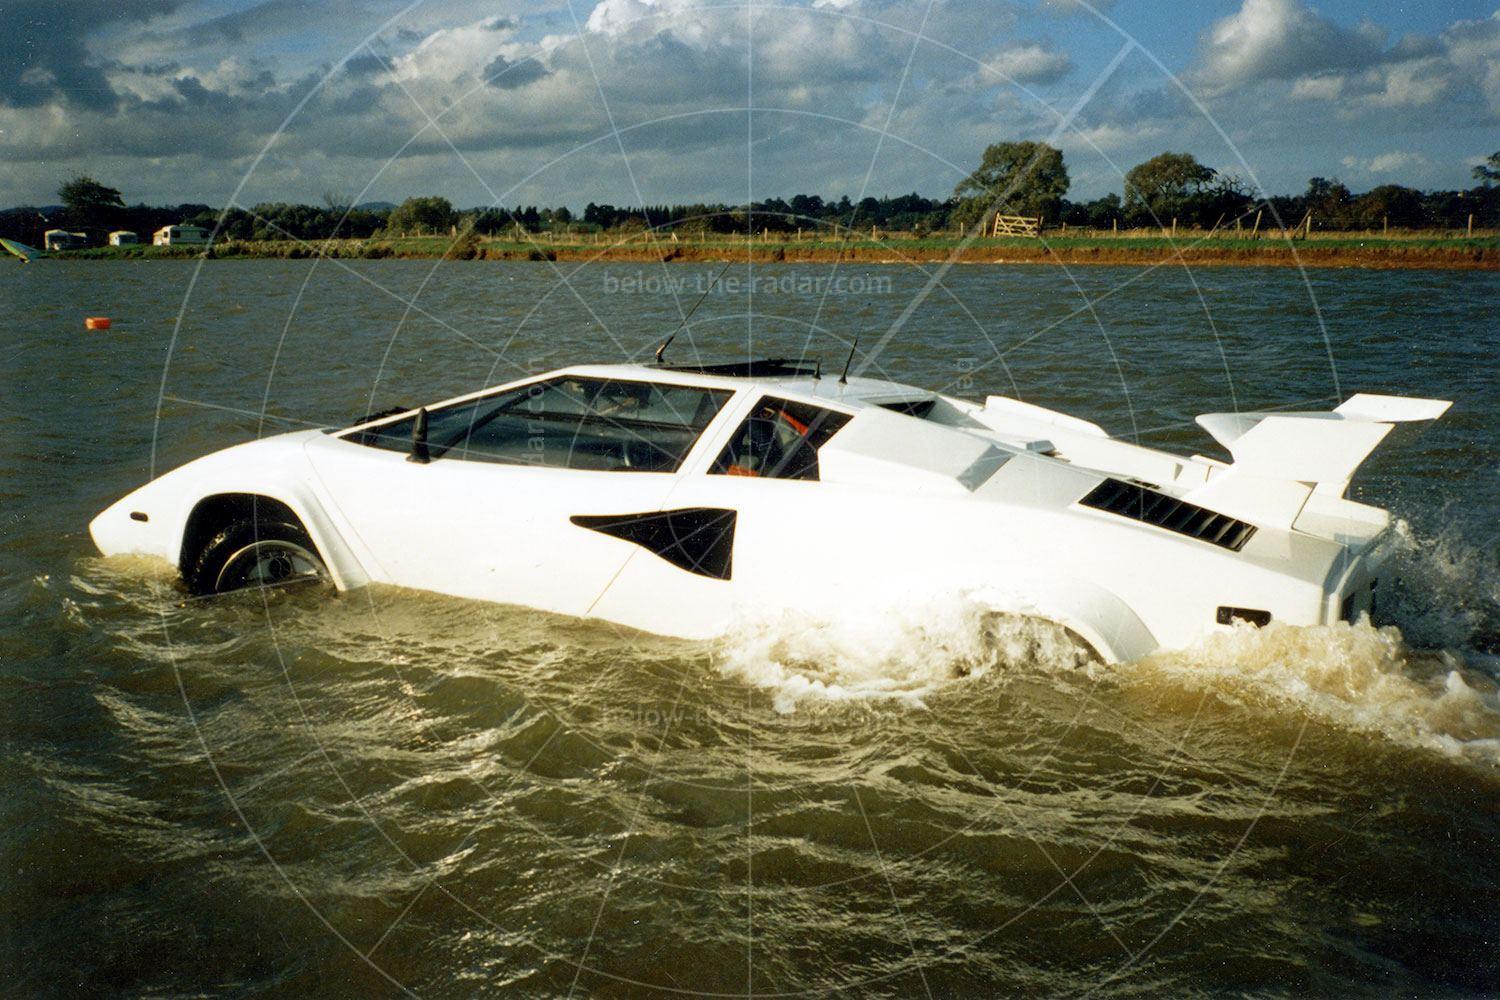 Mike Ryan's amphibious Lamborghini Countach